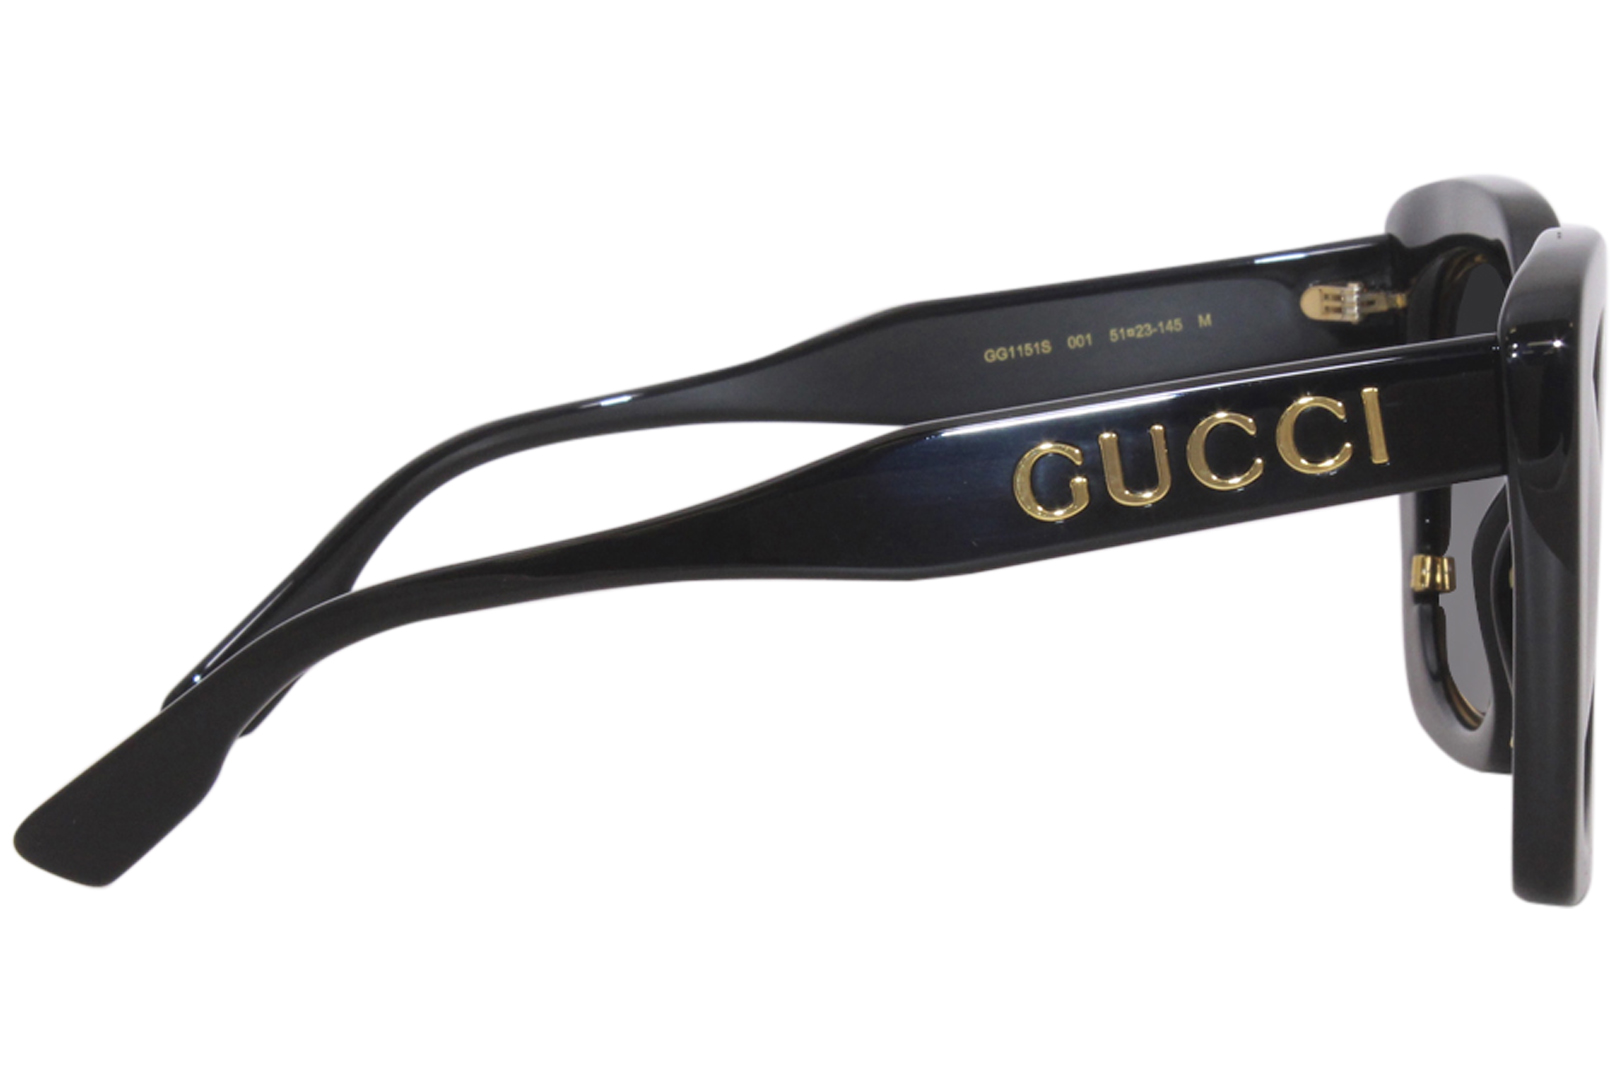 Gucci GG1151S 001 Sunglasses Women's Black/Grey Cat Eye 51-23-145